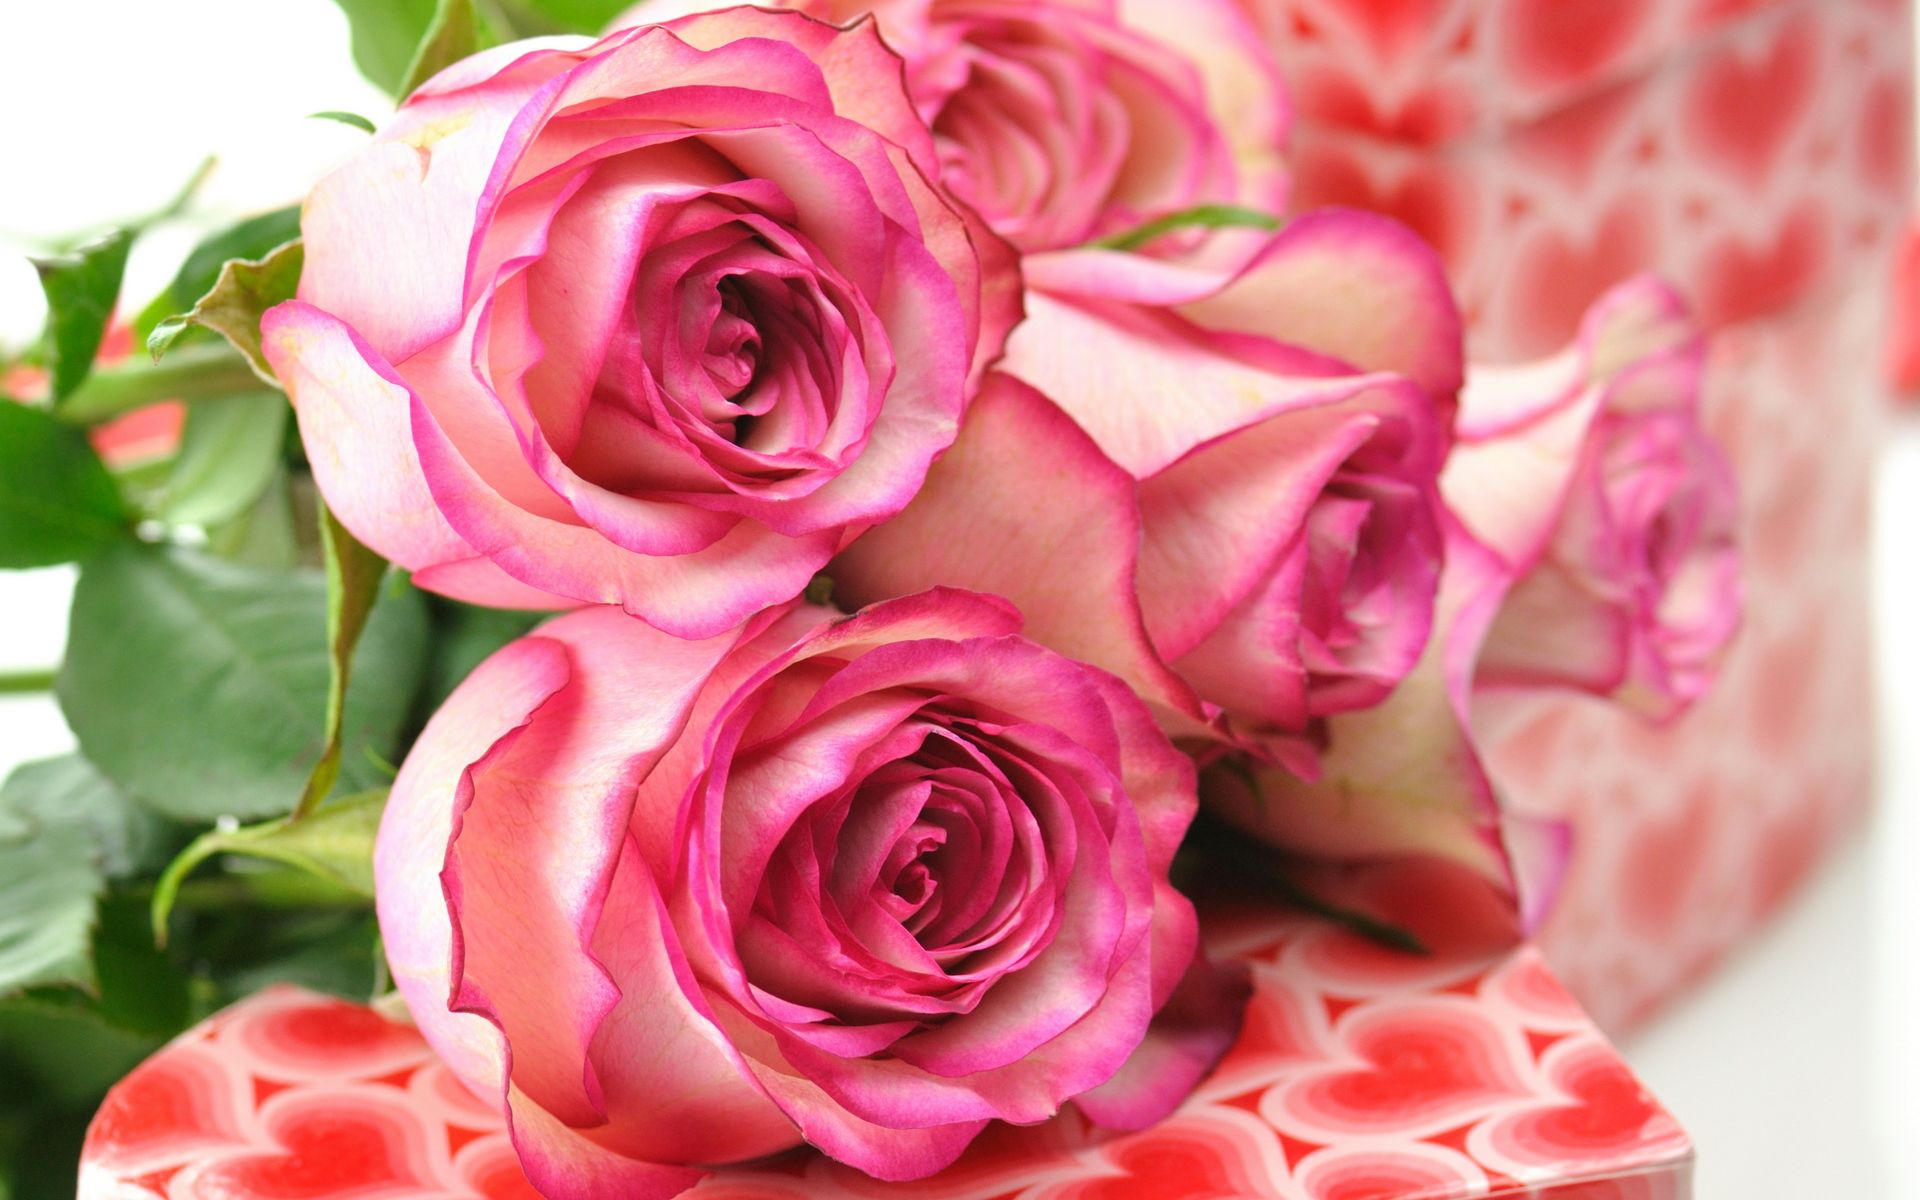 rose wallpaper hd,flower,rose,garden roses,flowering plant,pink